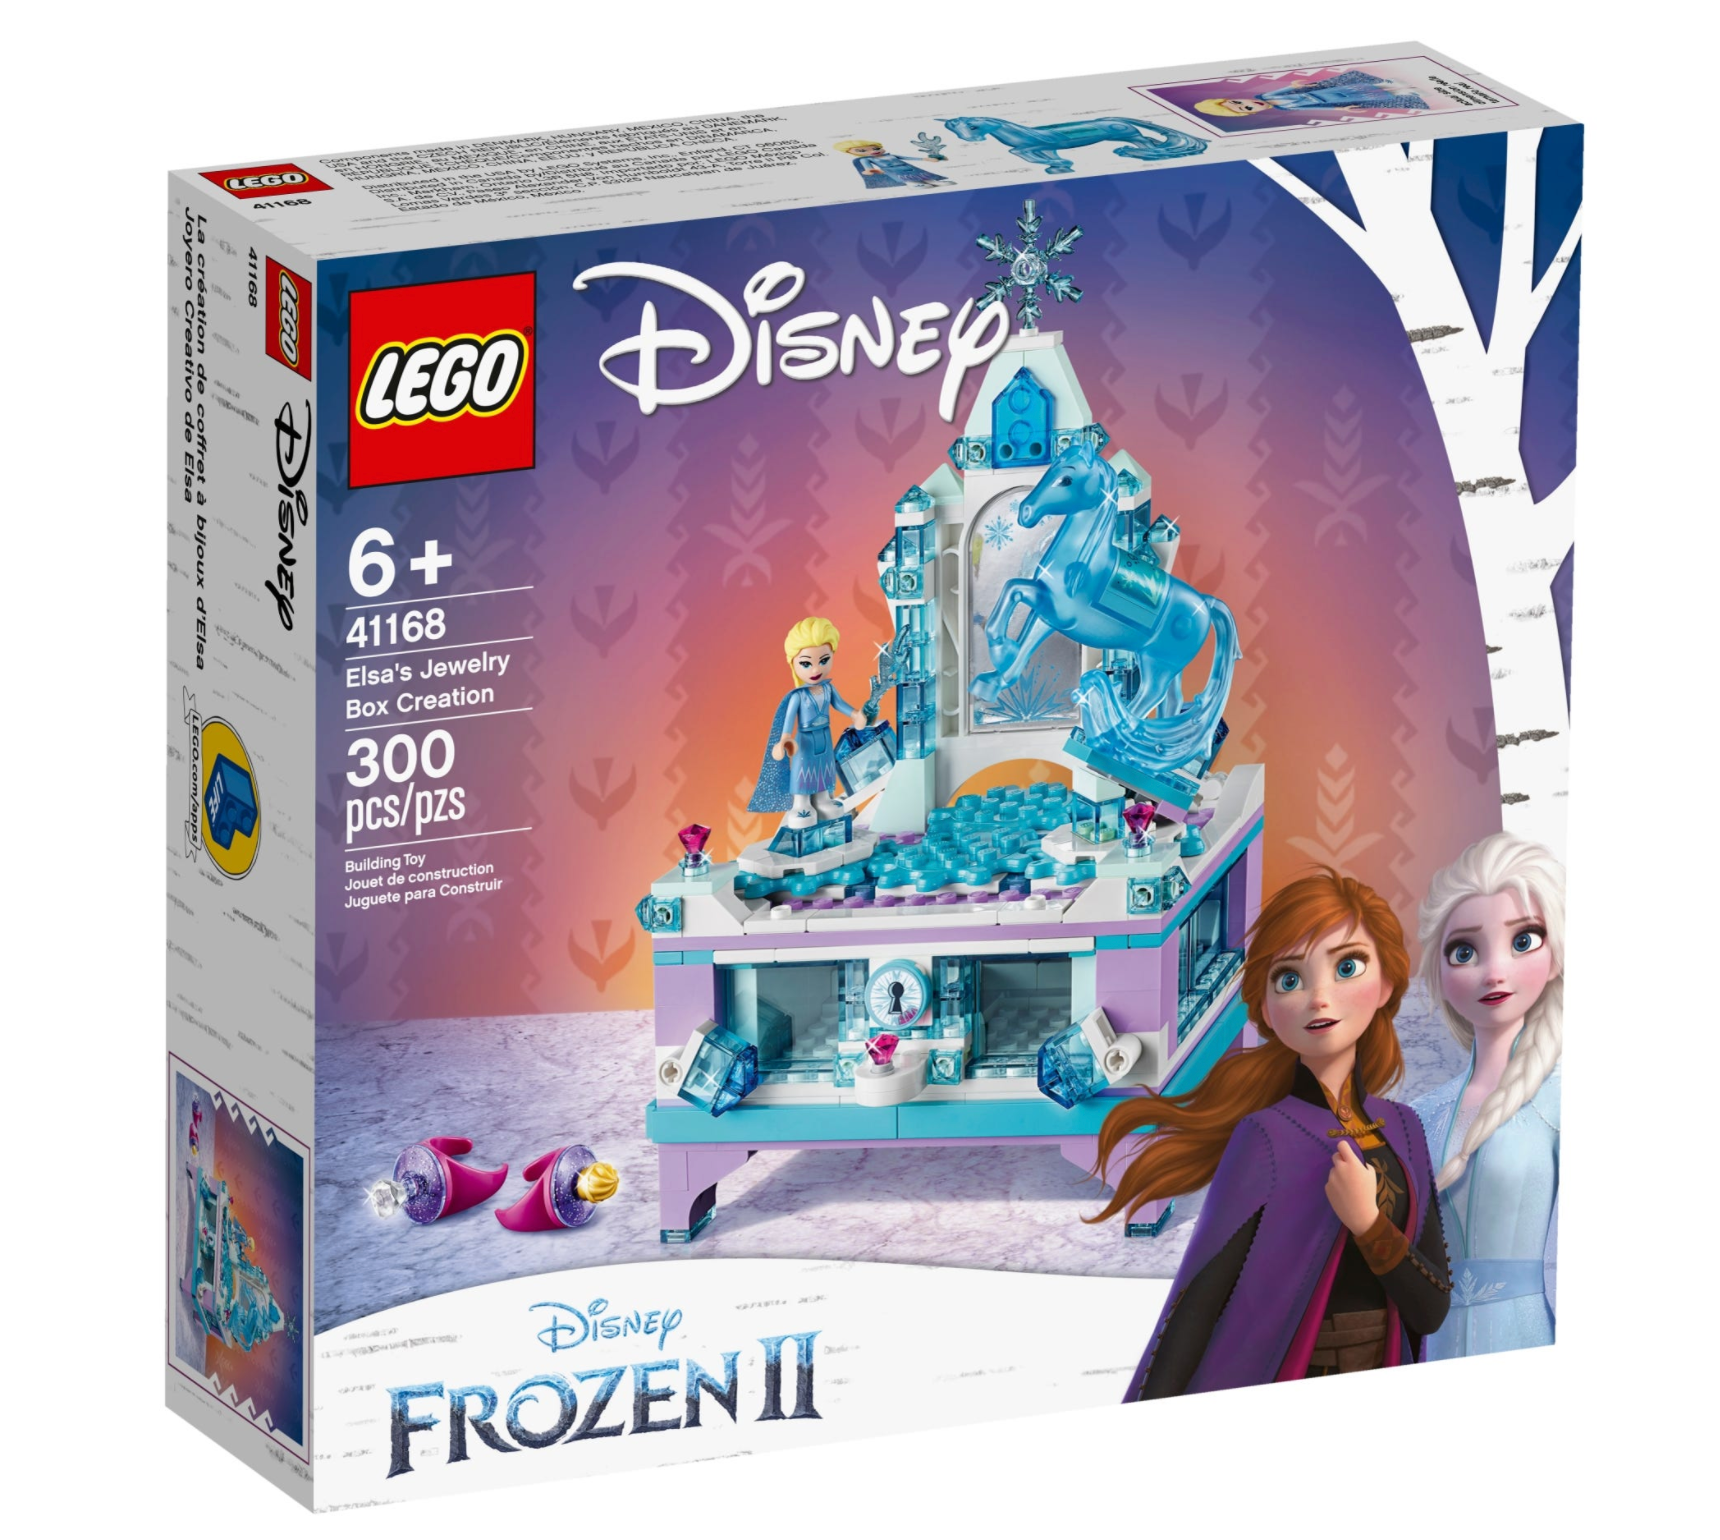 LEGO: Disney Princess - Elsa's Jewelry Box Creation